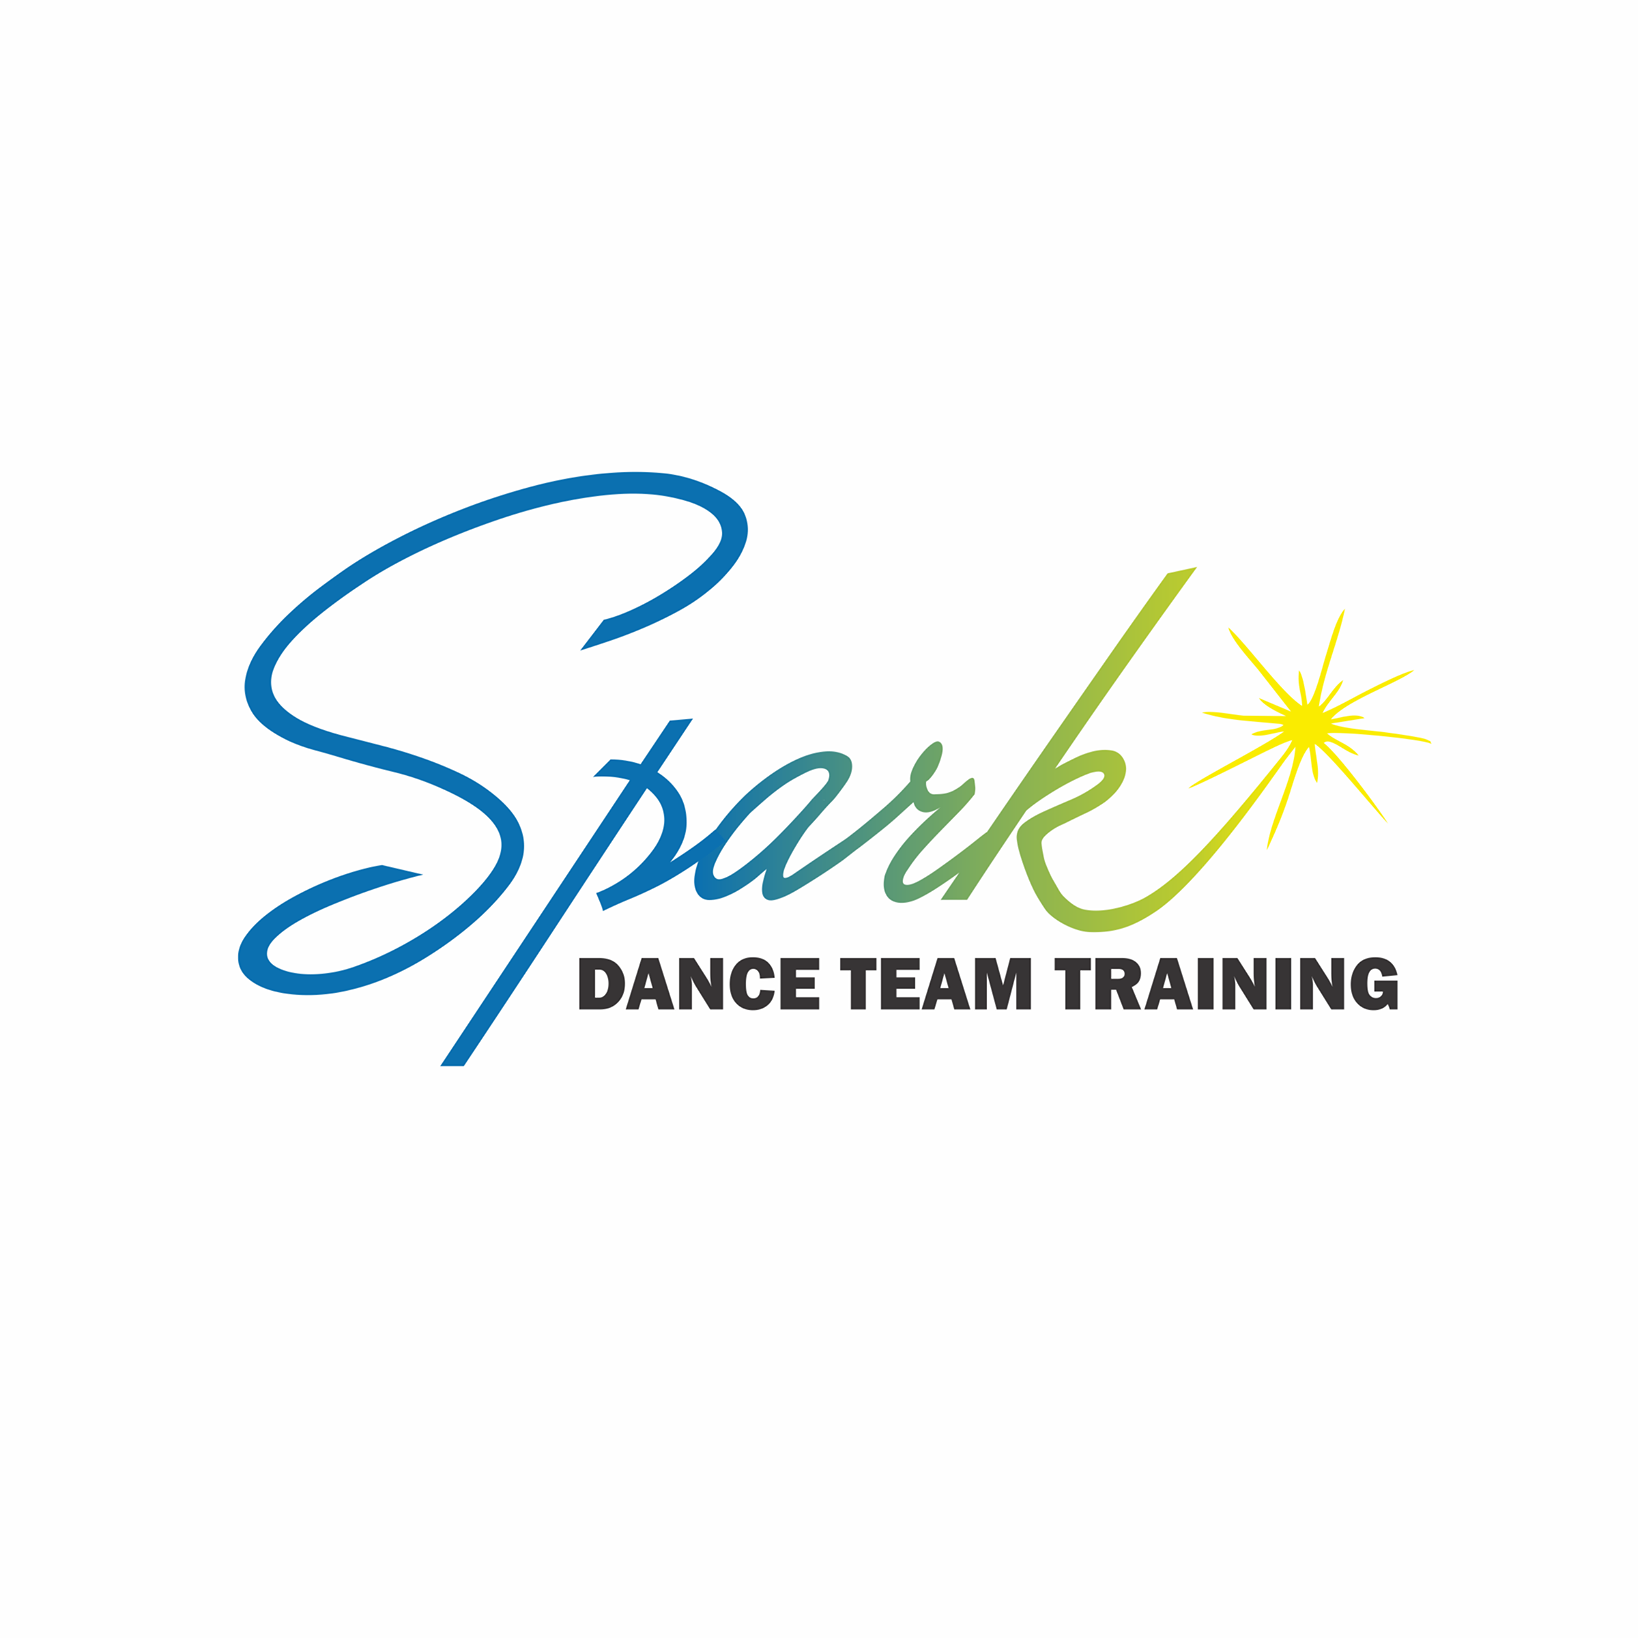 SPARK Dance Team Training logo